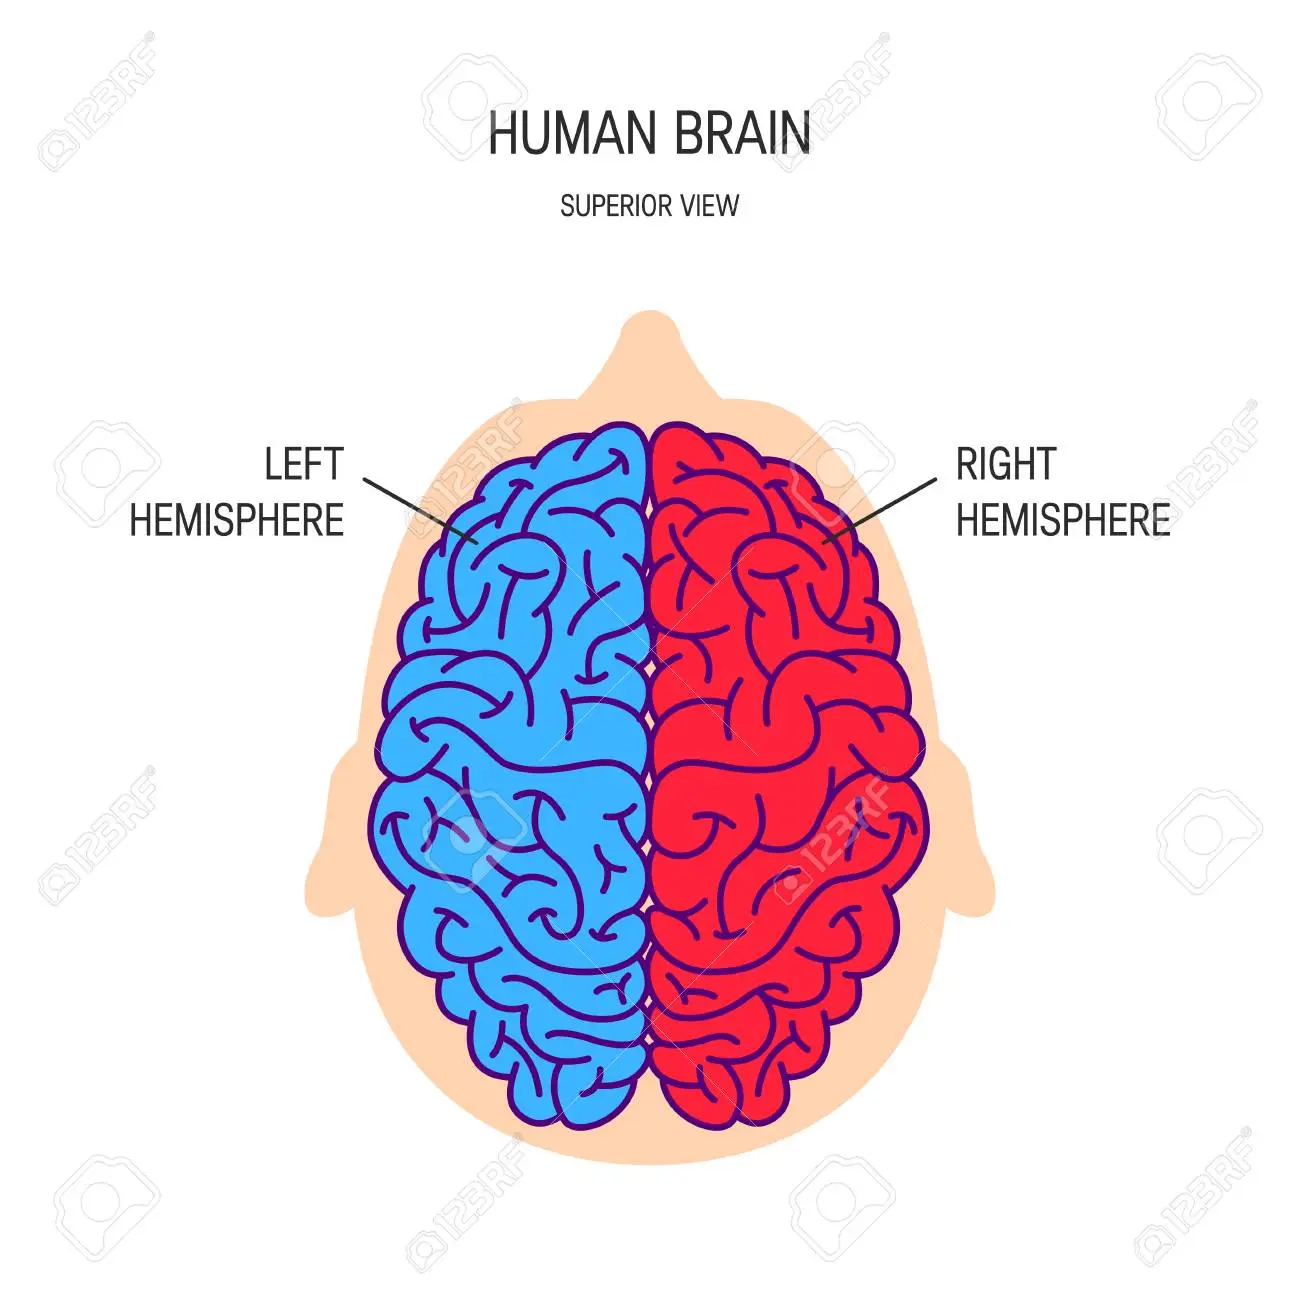 <p><strong>Half</strong> of the brain</p><ul><li><p>Right hemisphere on the right side</p></li><li><p>Left hemisphere on the left</p></li></ul>